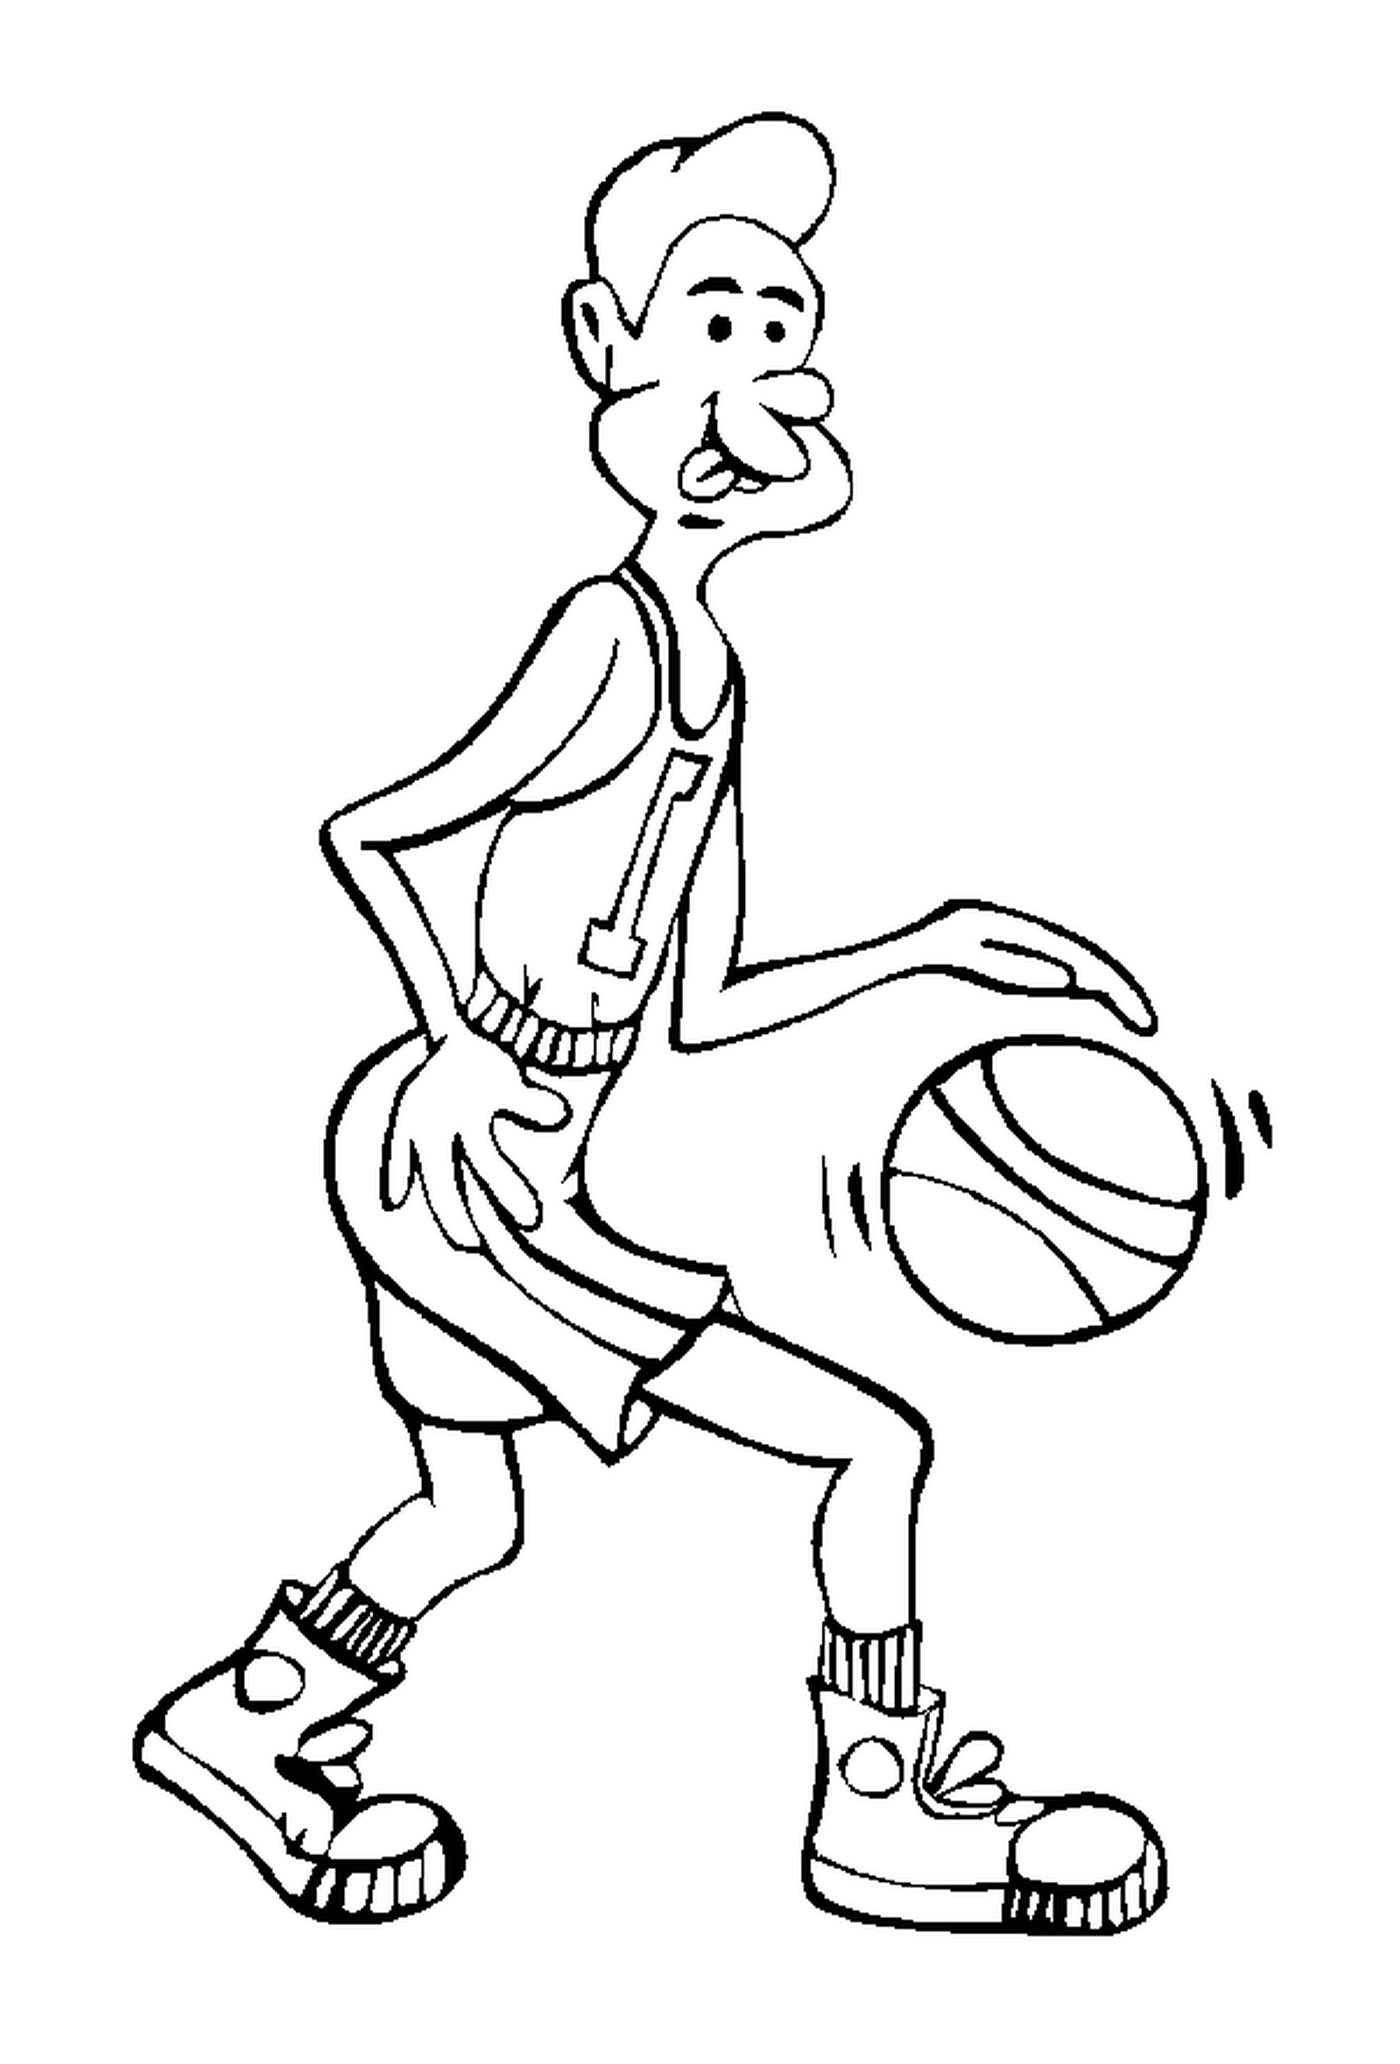  Баскетболист держит мяч 